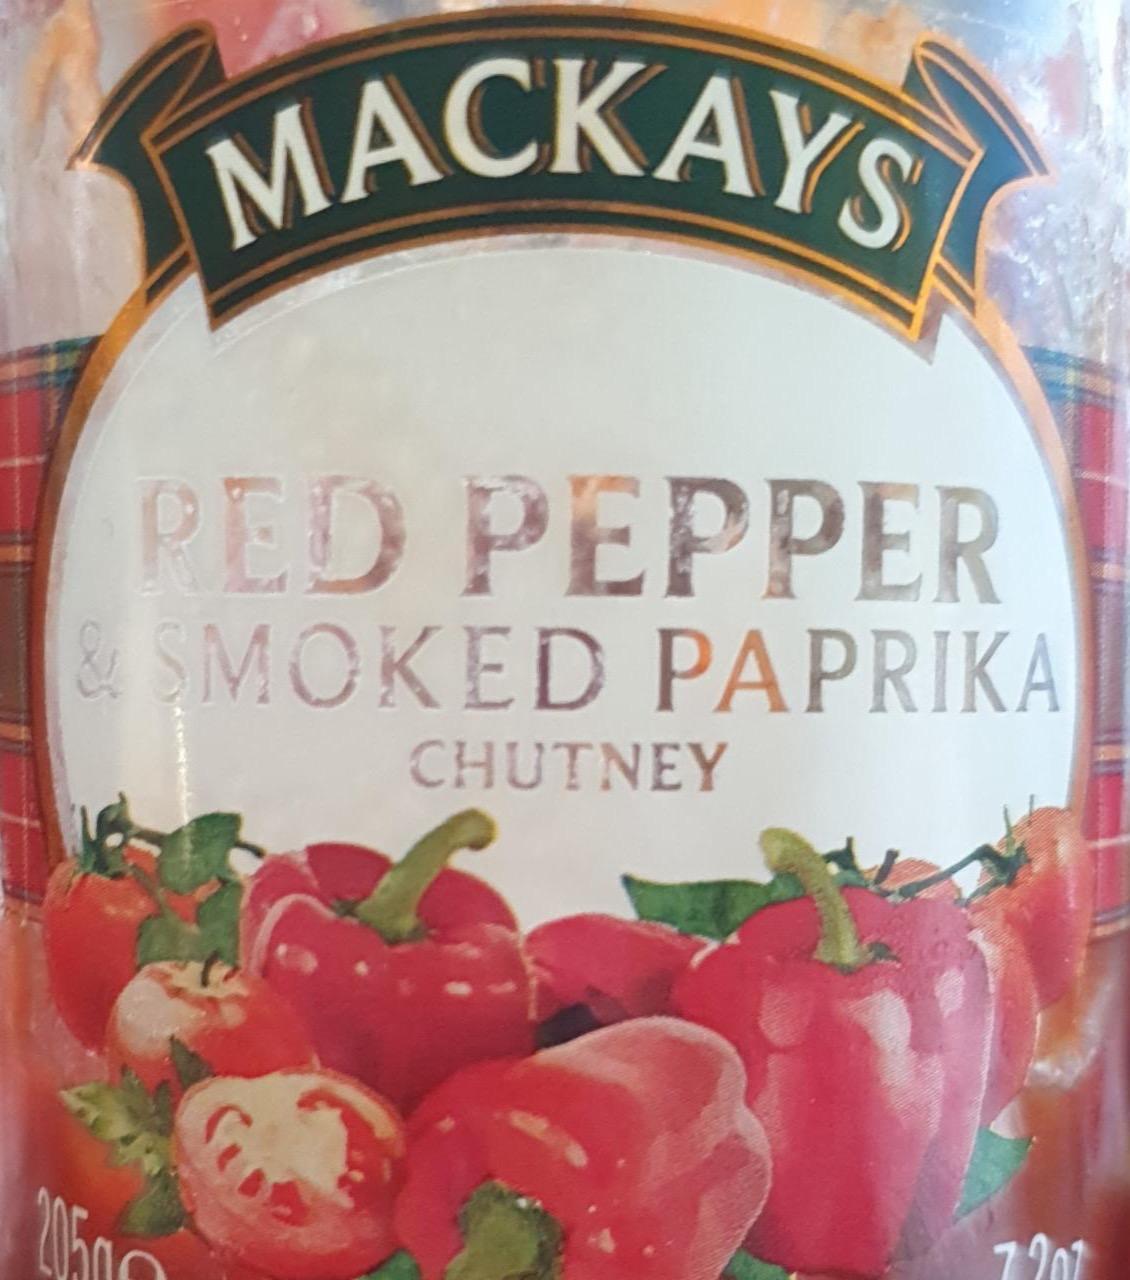 Fotografie - Red pepper & smoked paprika chutney Mackays